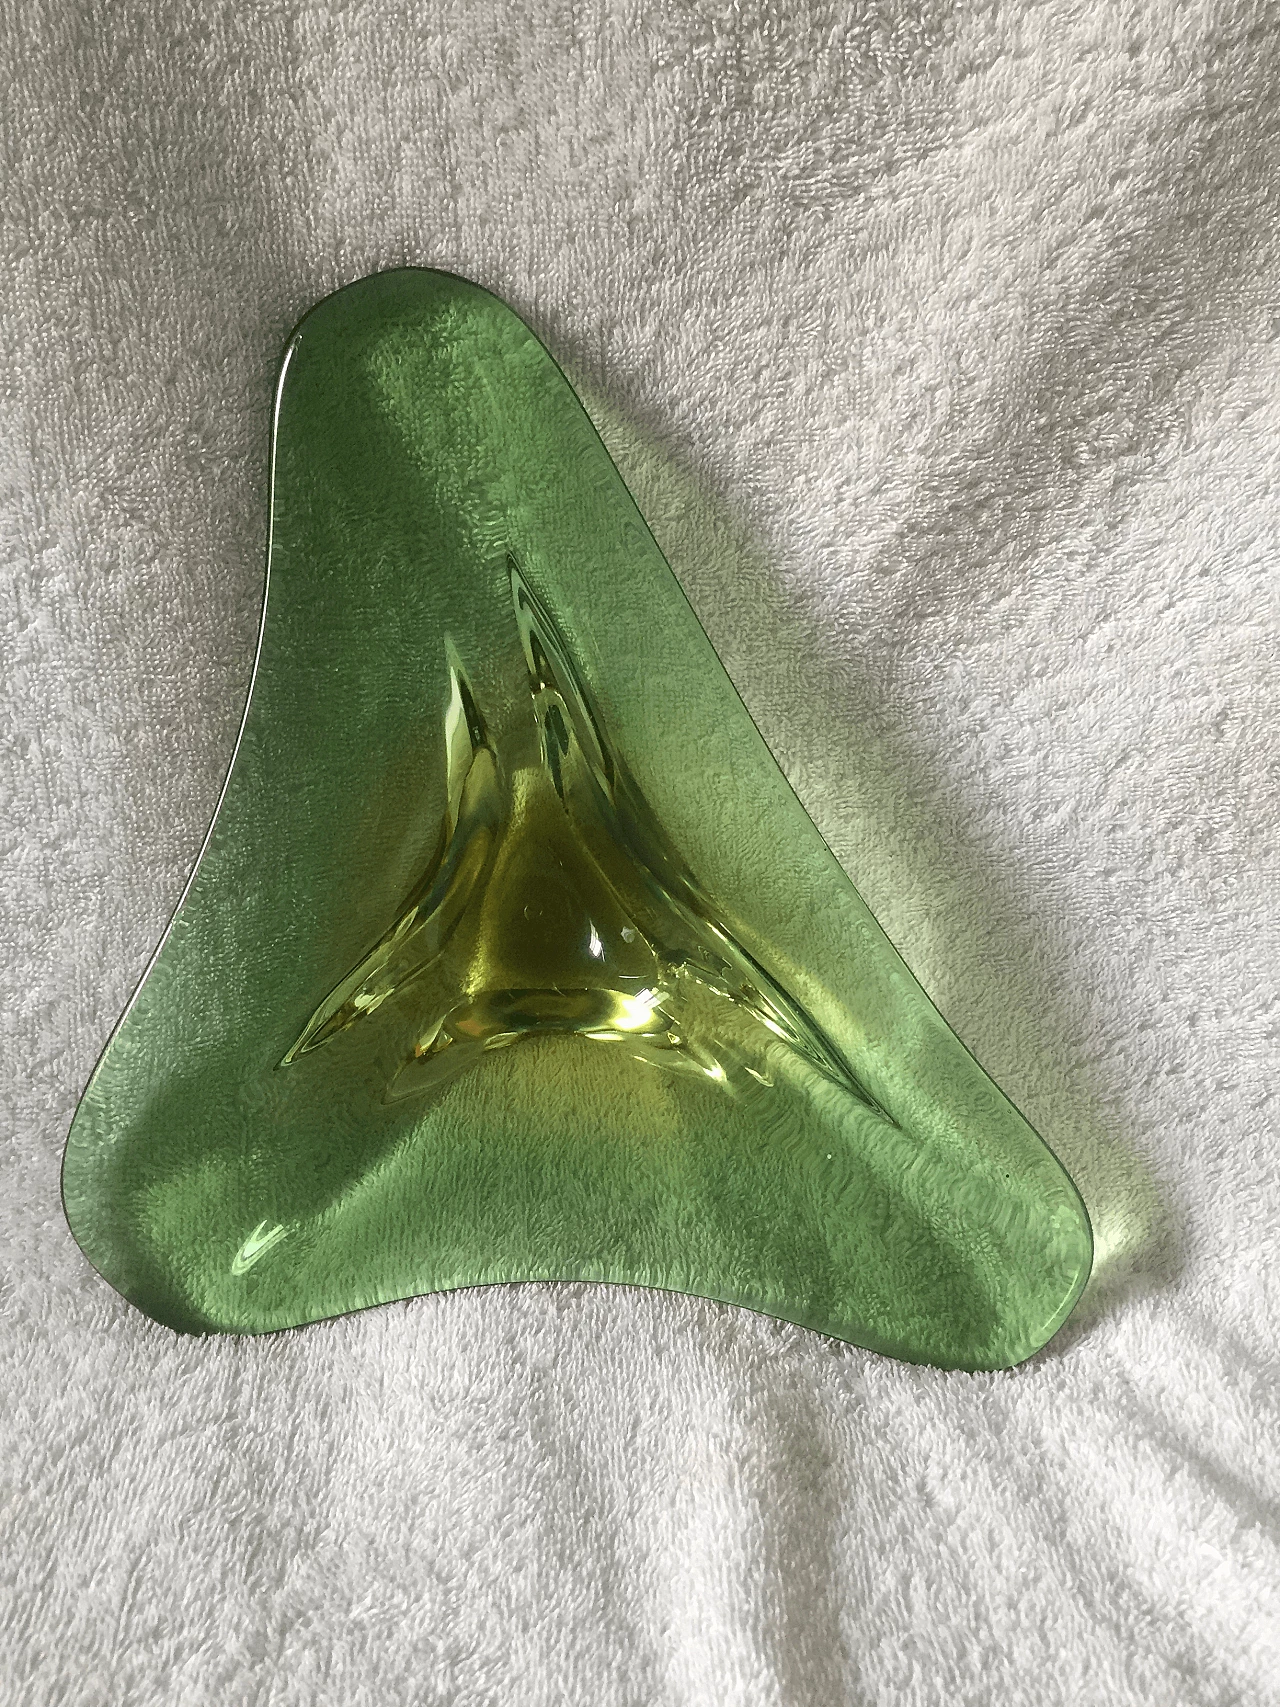 Seguso green Murano glass ashtray, 1970s 1367377